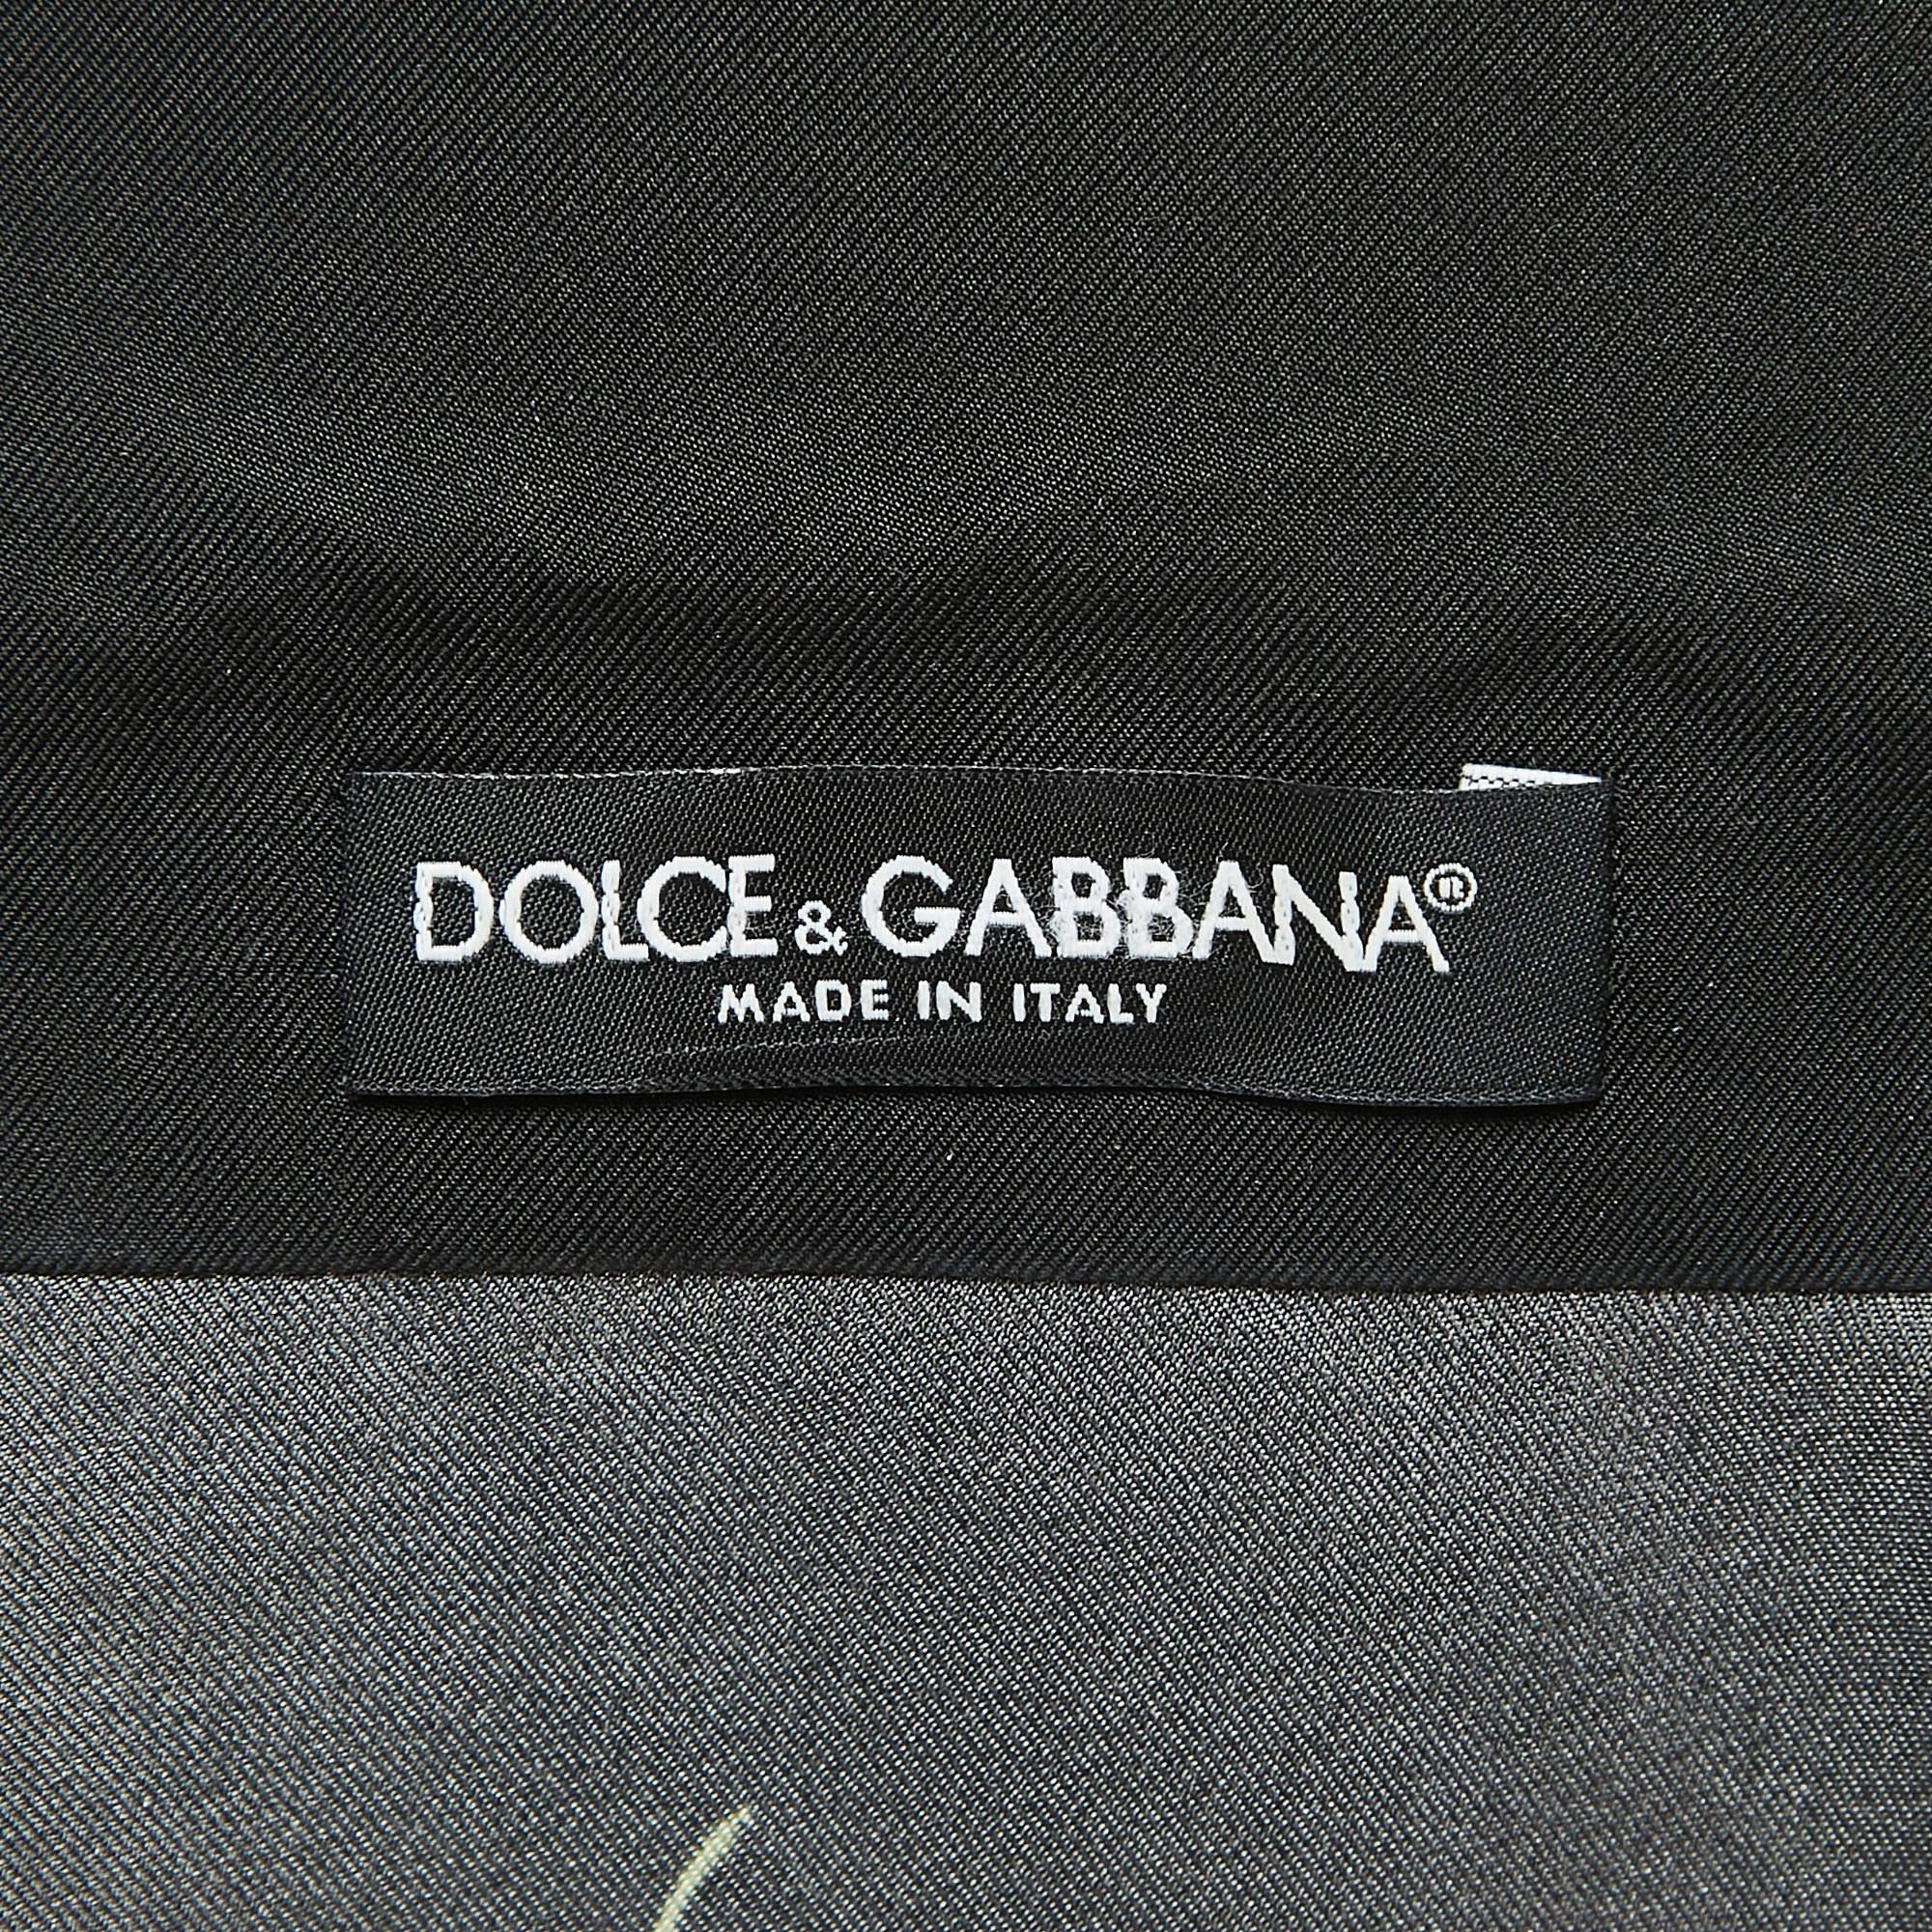 Dolce & Gabbana Black Floral Printed Silk Pajama Top S In Good Condition For Sale In Dubai, Al Qouz 2